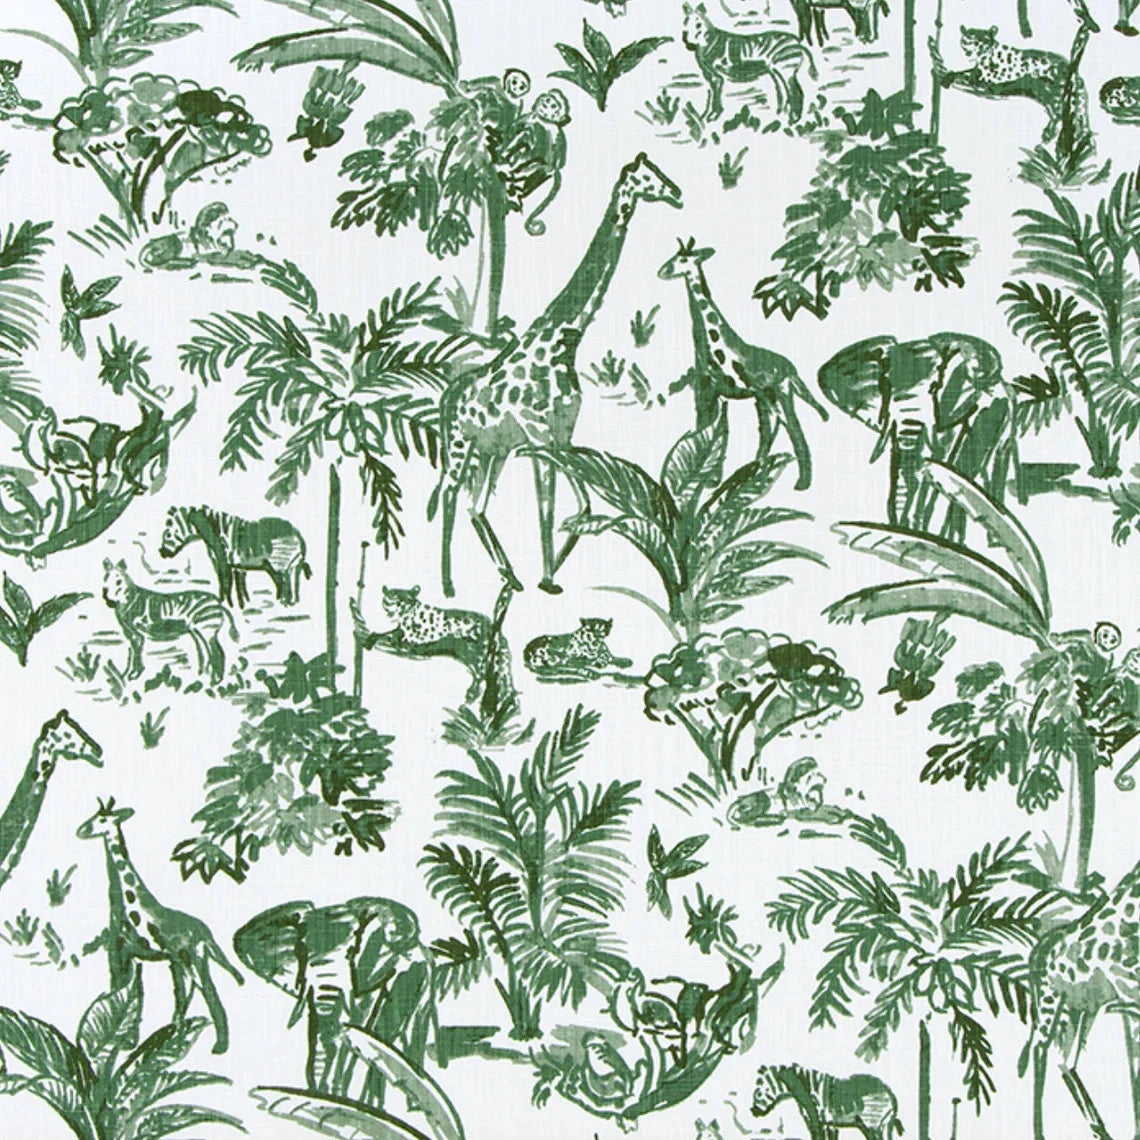 tailored tier curtains in meru fairway green safari animal toile